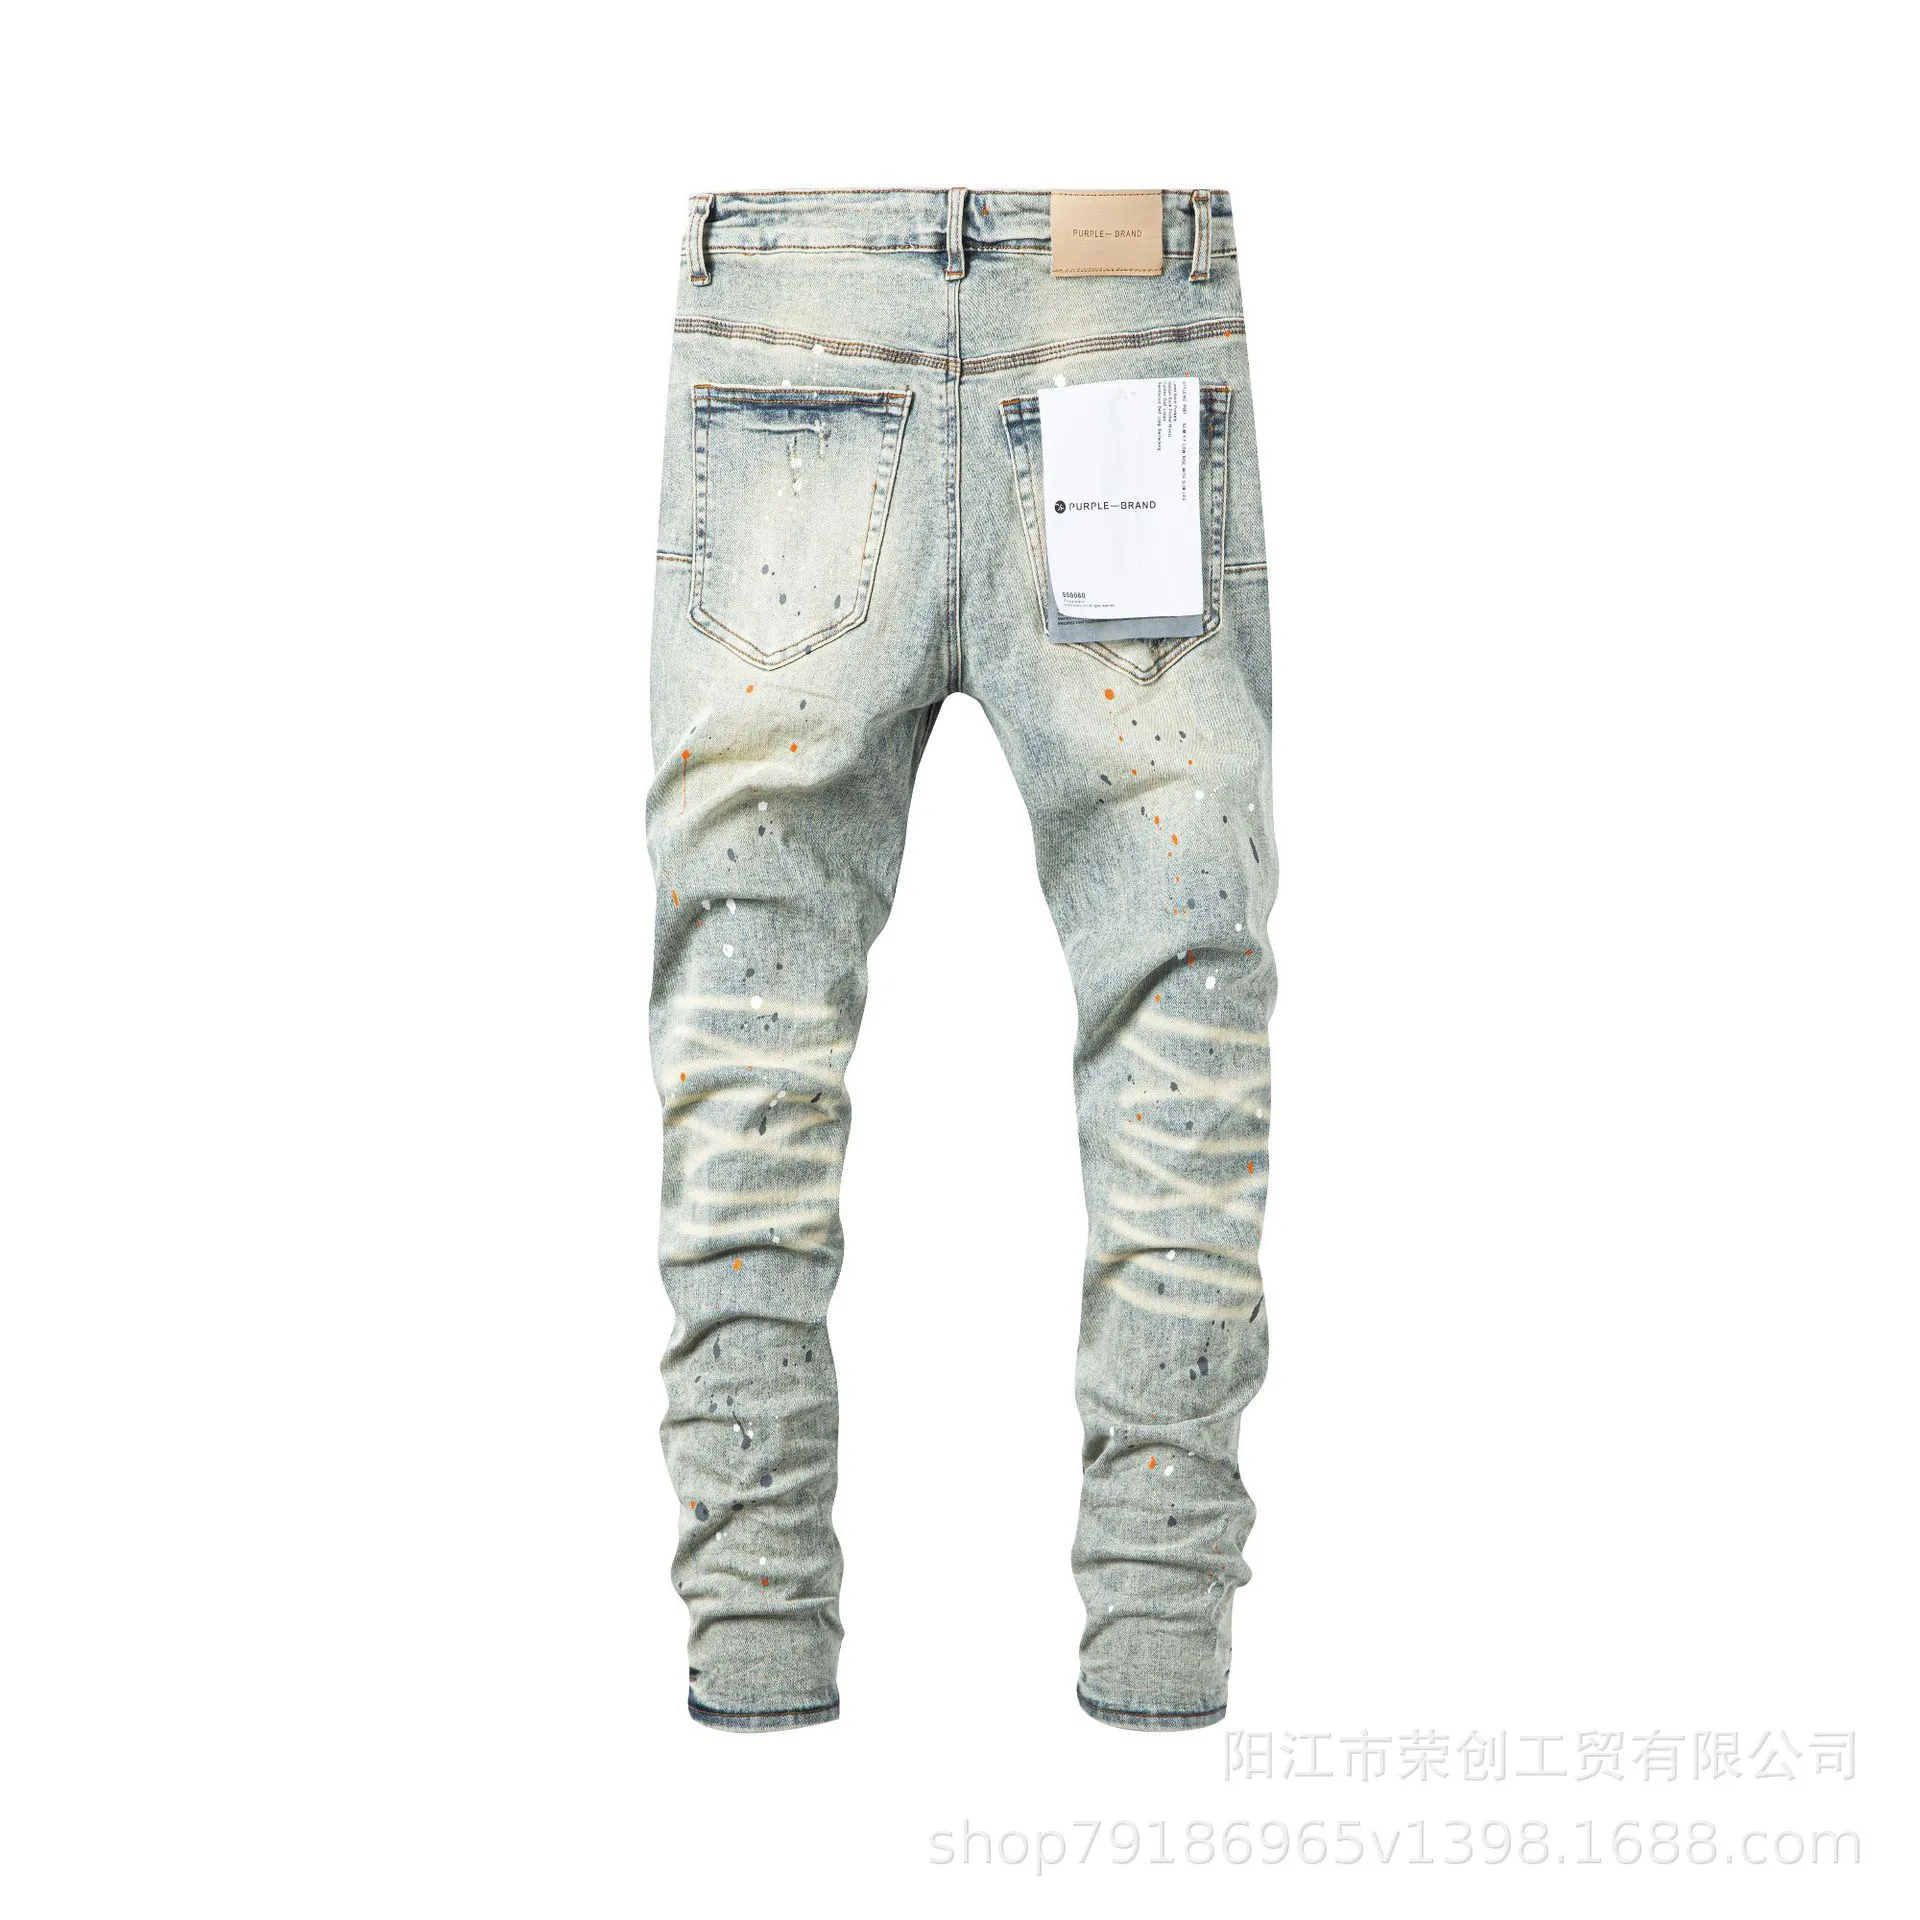 Jeans viola jeans jeans americani high street hole robin robin religion pantaloni dipingono più alti dimensioni di idee: m-xl-l